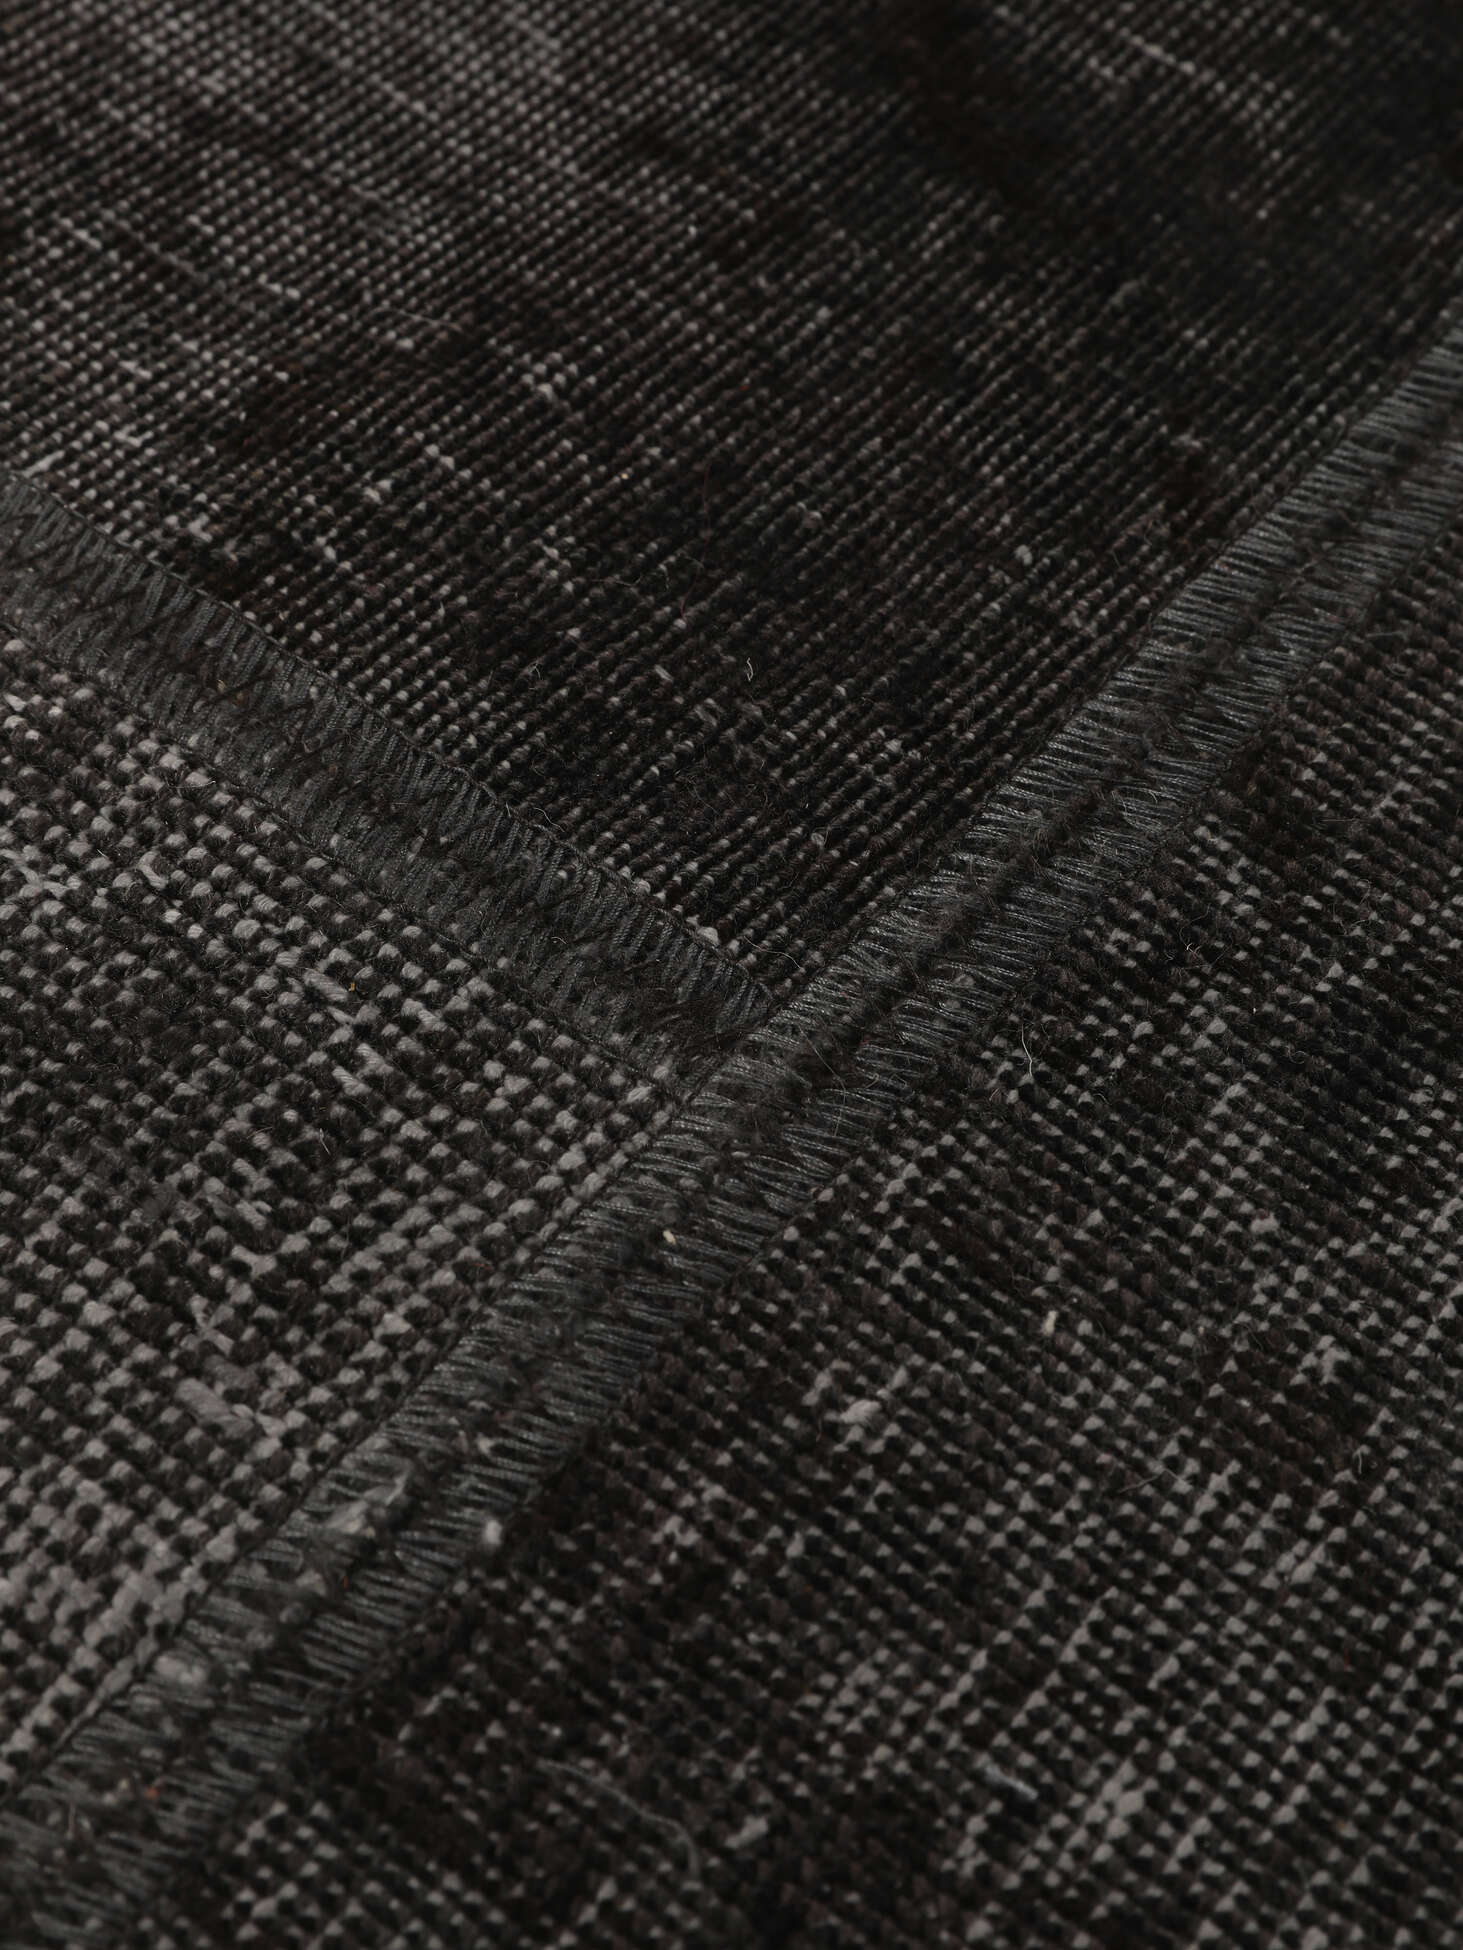 
    Patchwork - Black - 196 x 303 cm
  